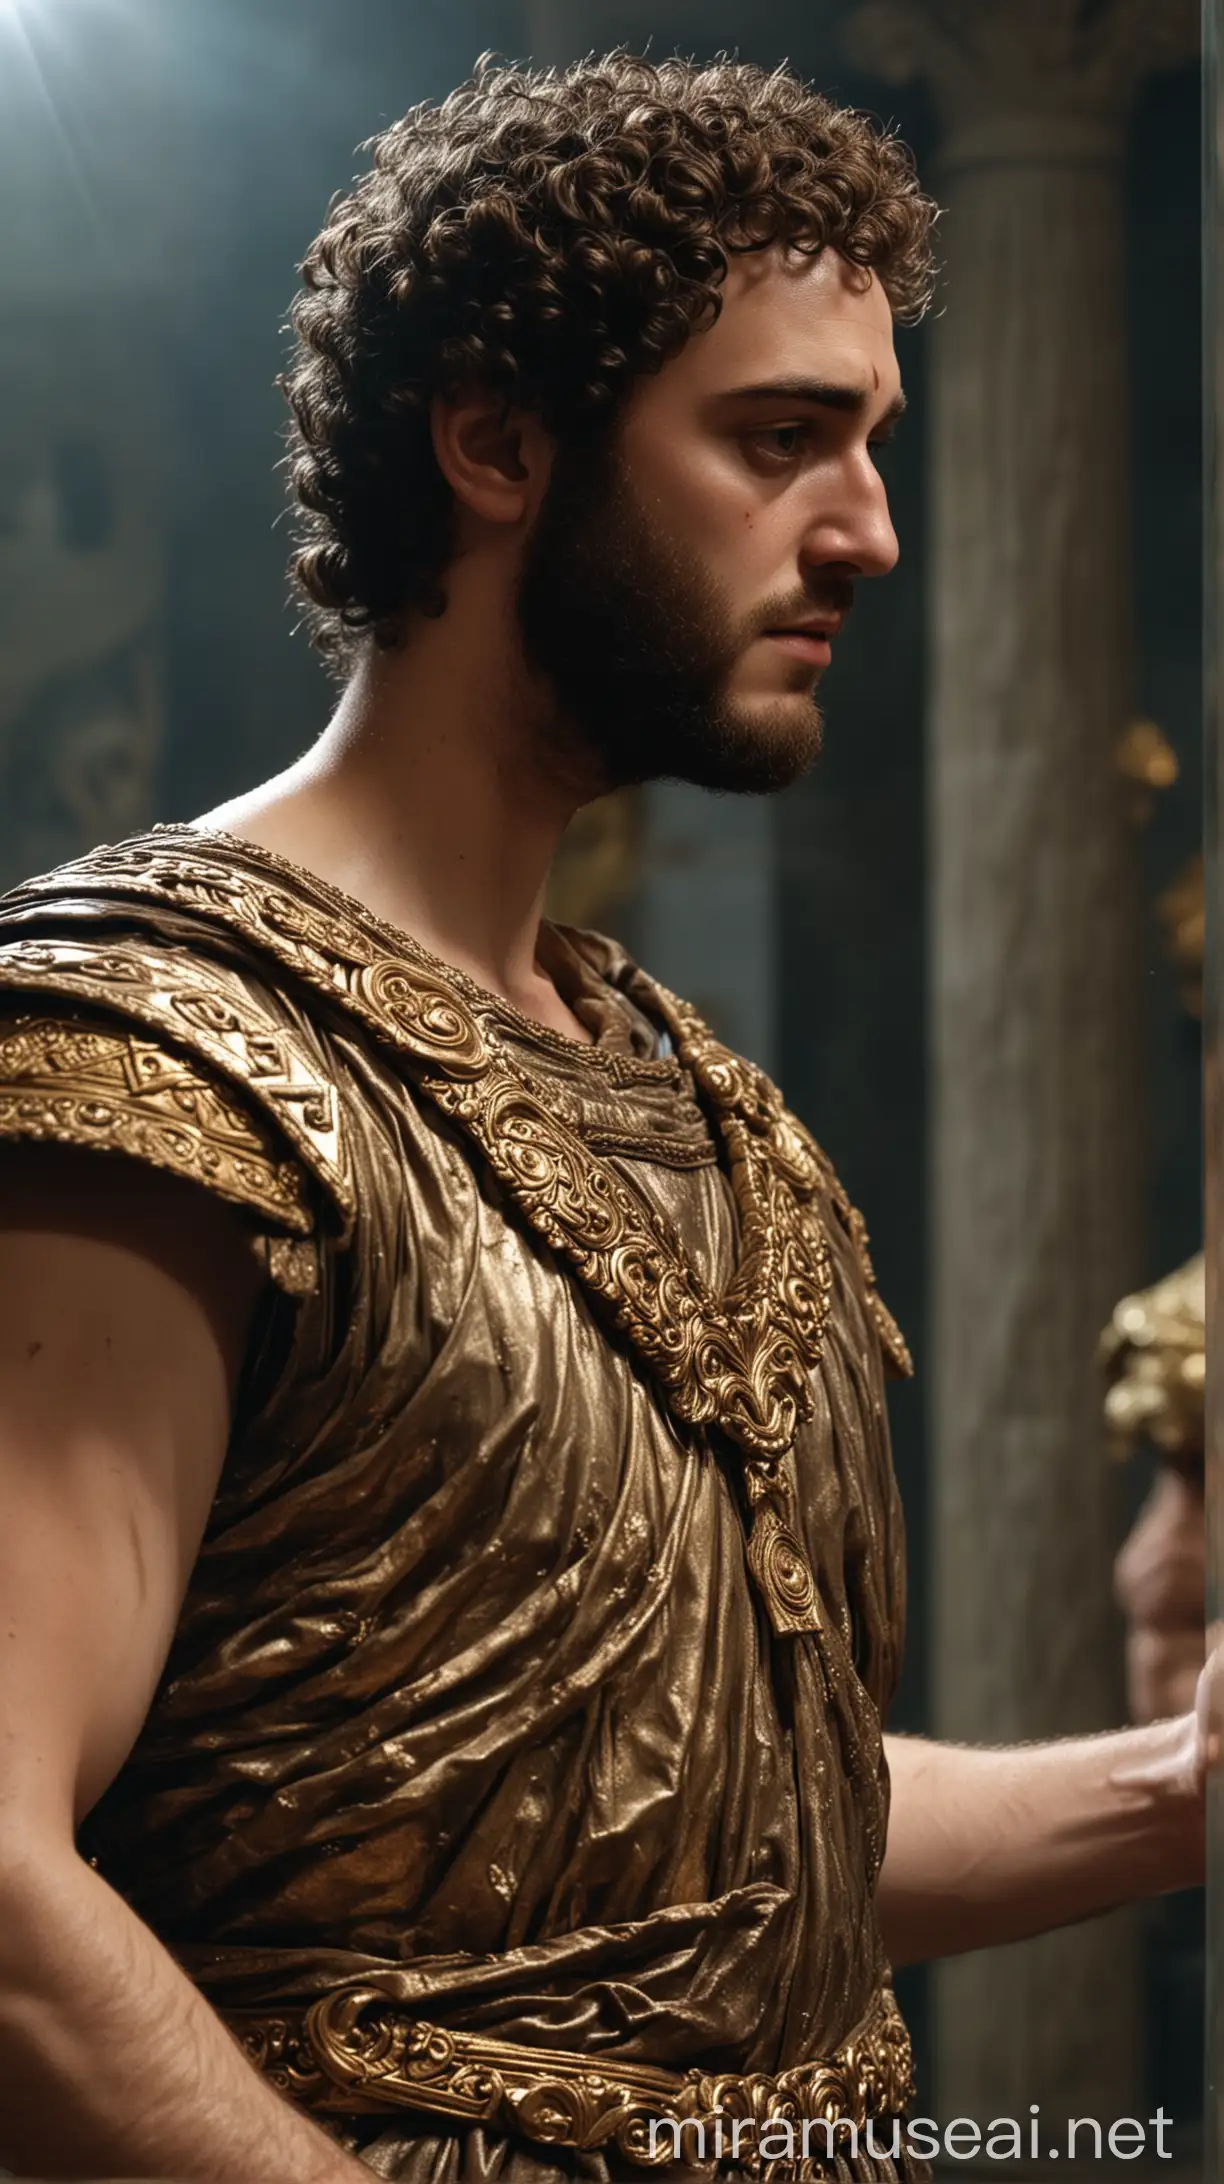 Hyper Realistic Portrait Commodus as a Demigod Reflecting